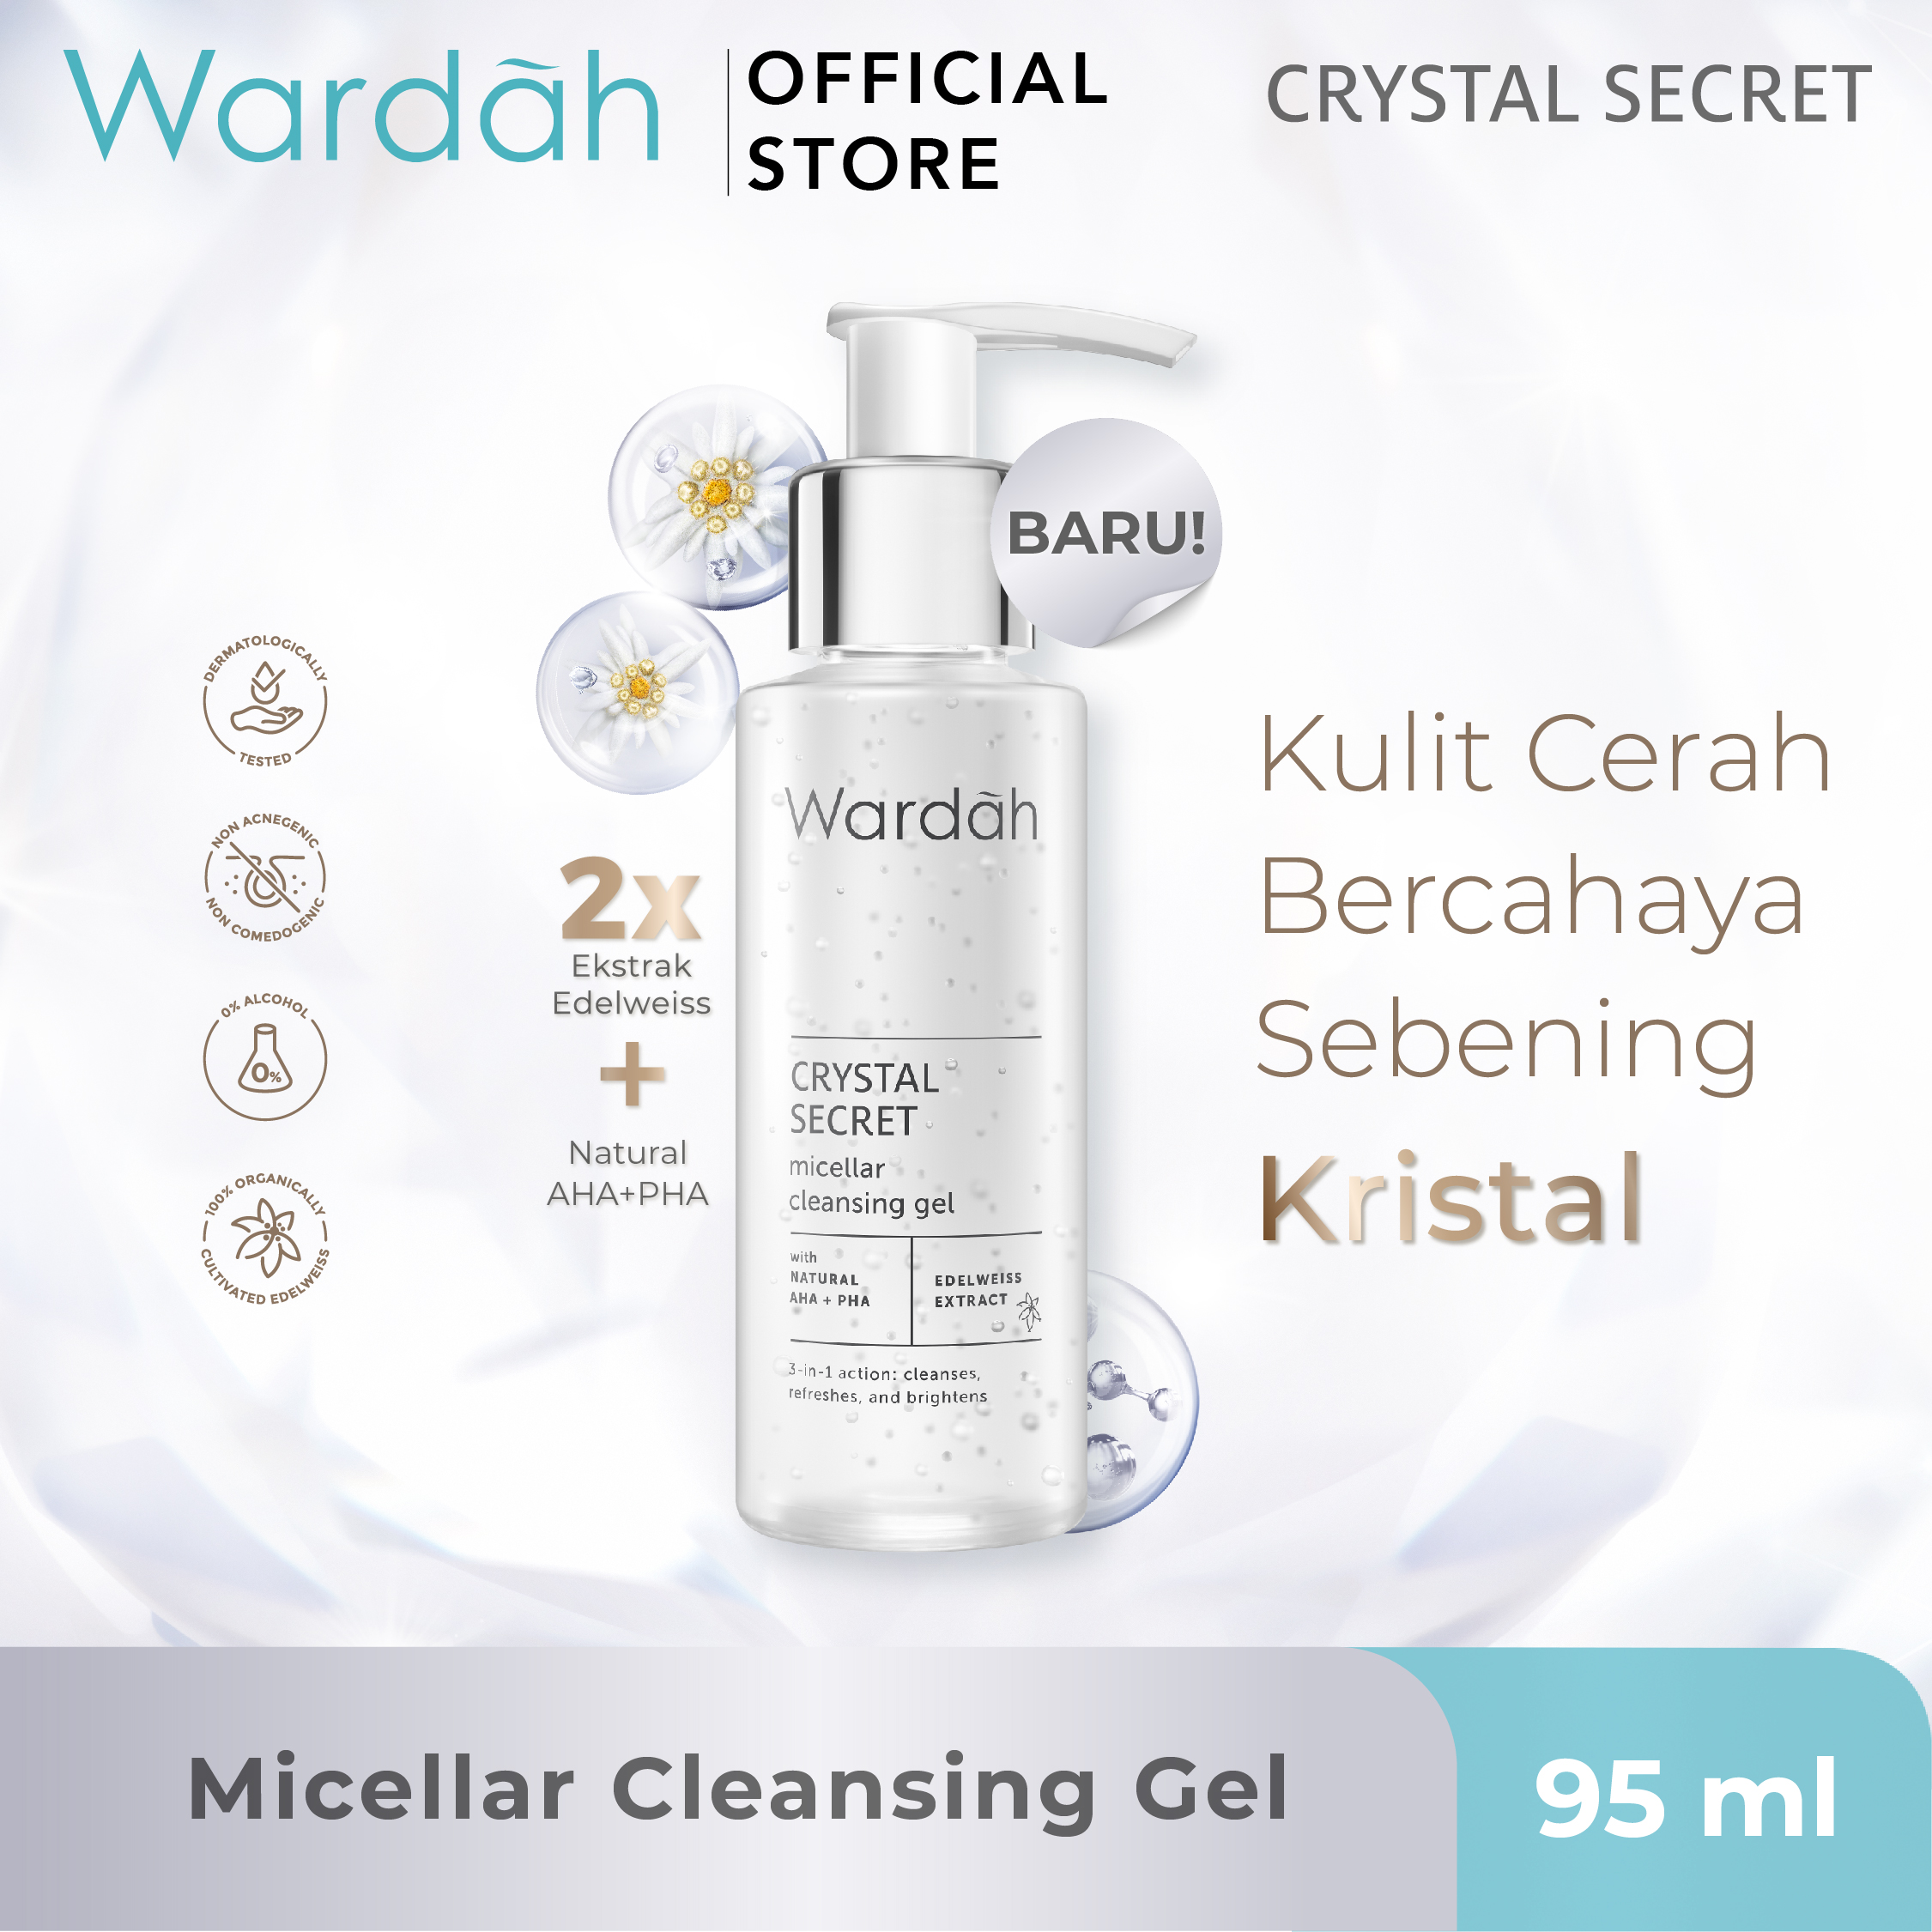 Crystal secret wardah